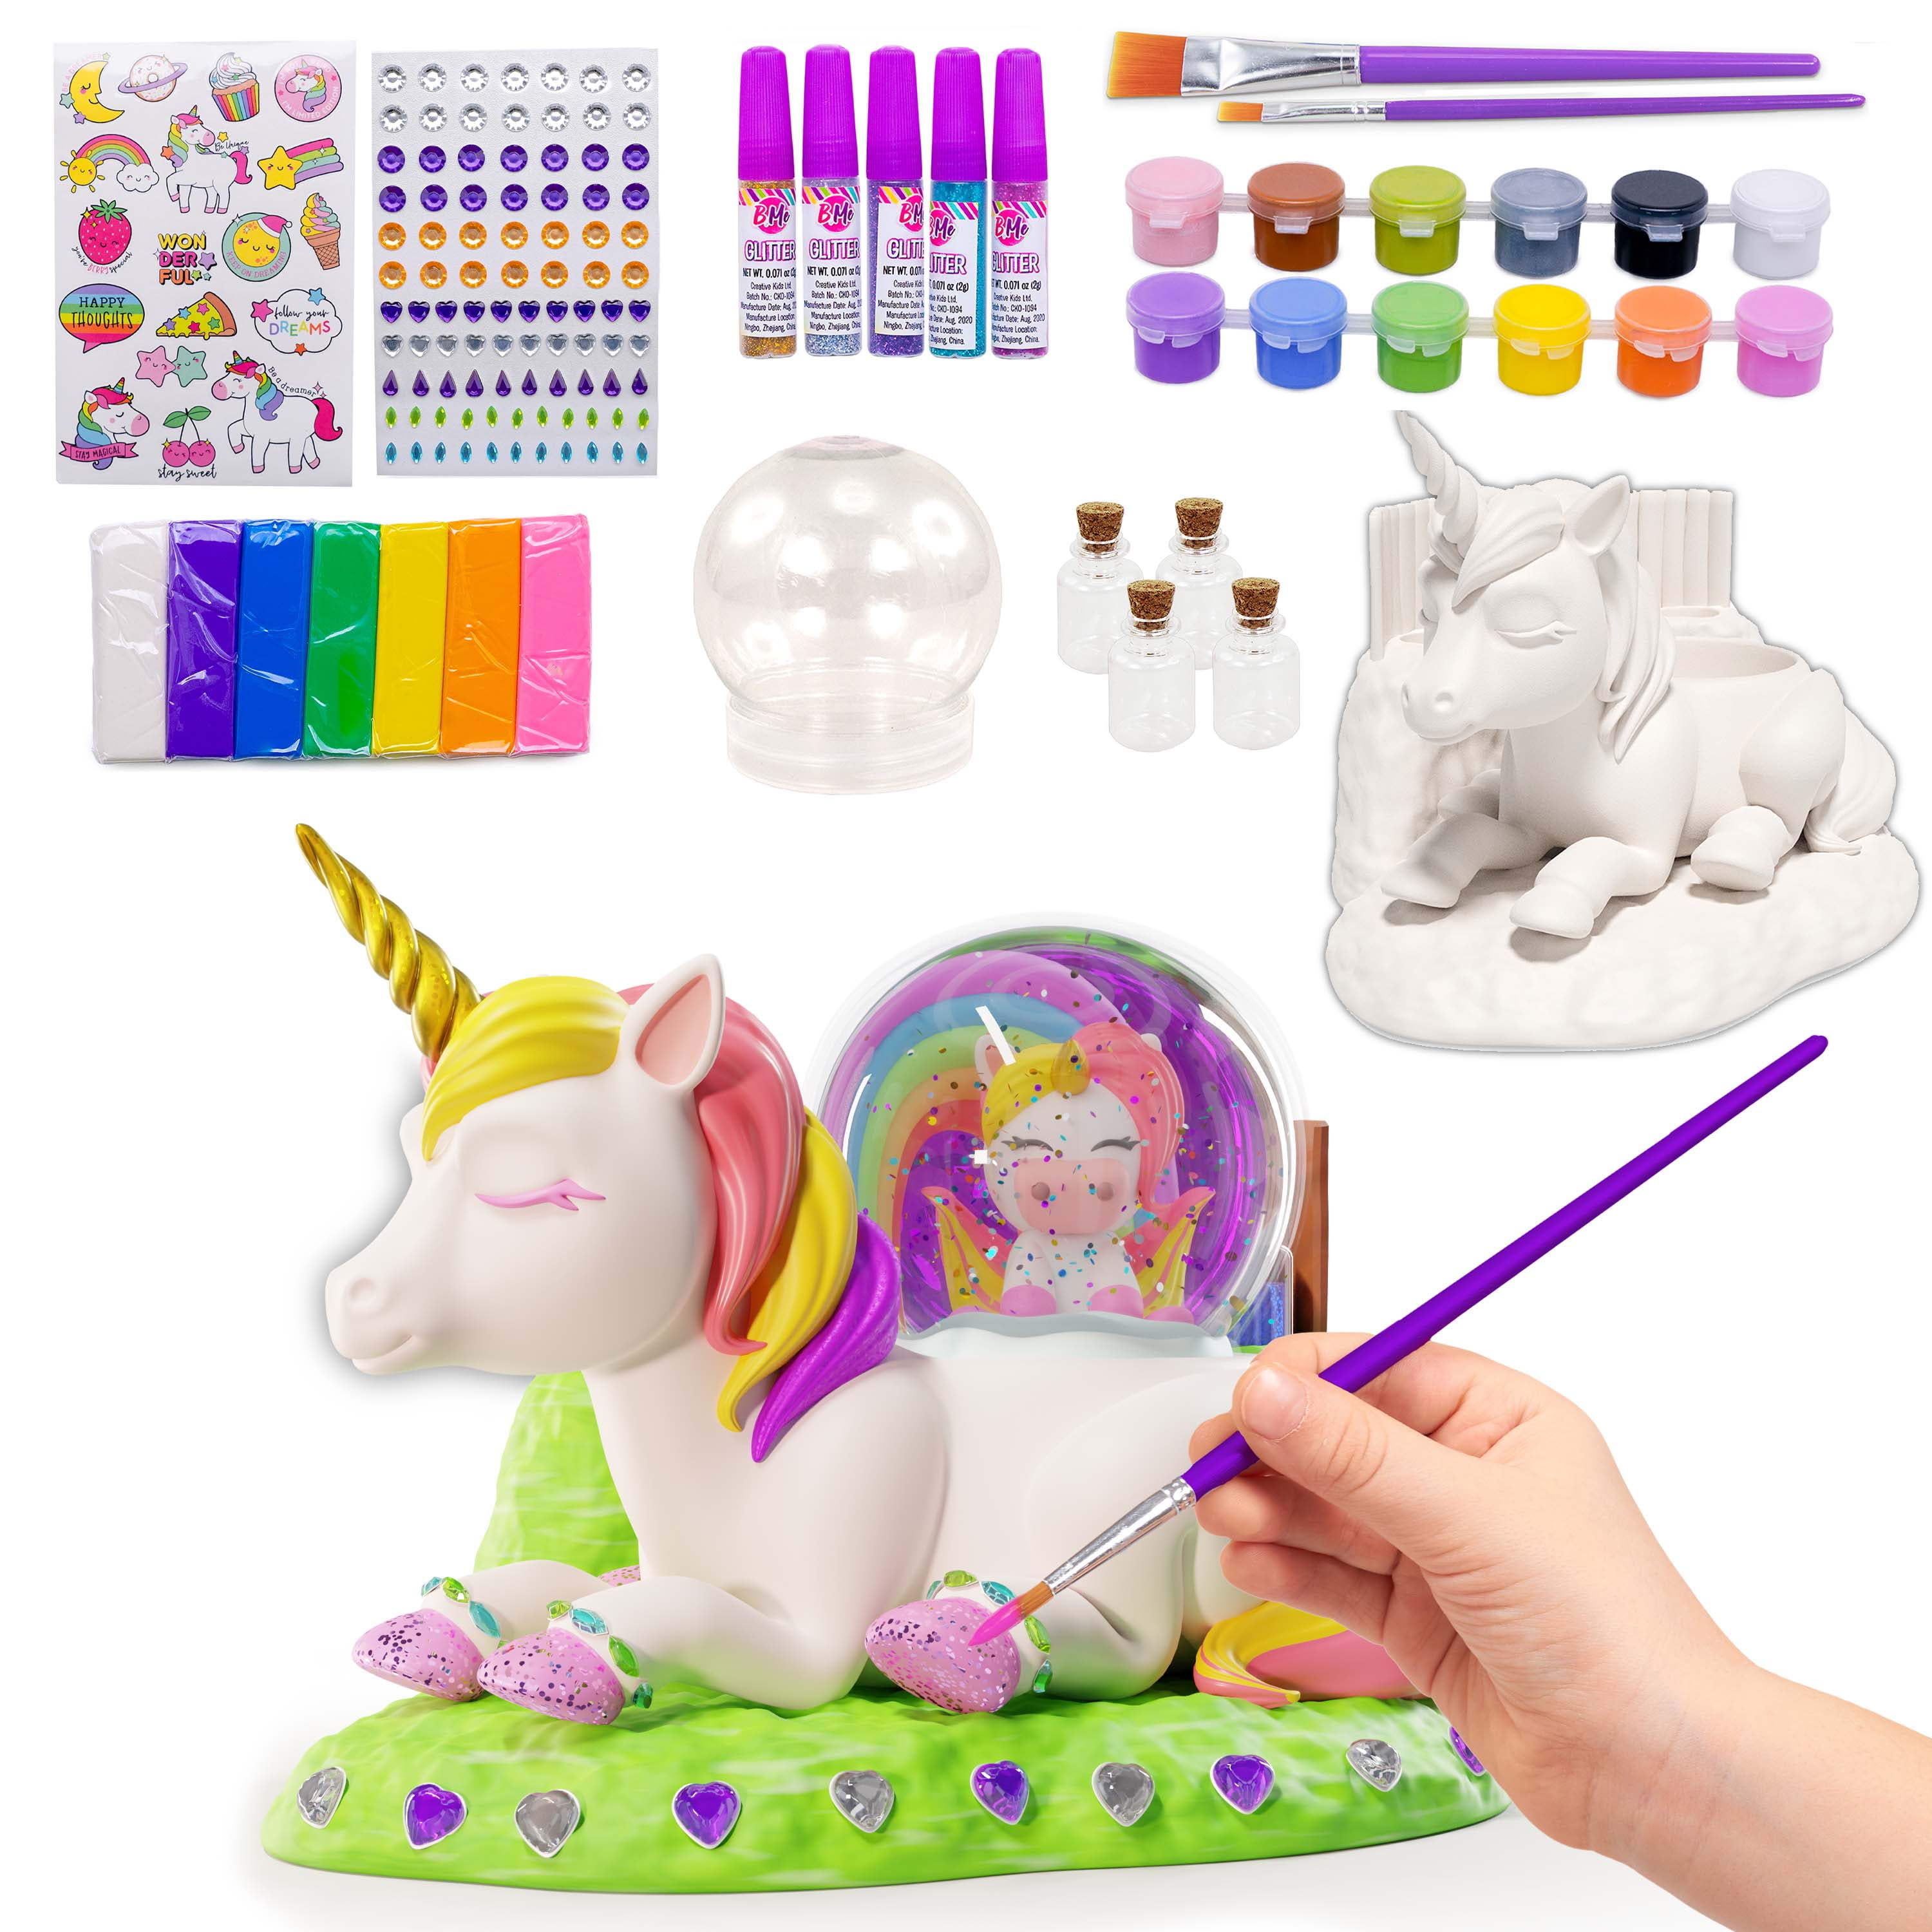 Creative Kids Paint Your Own Unicorn Craft Kit - Ceramic Unicorn Snow Globe  – Ages 6+